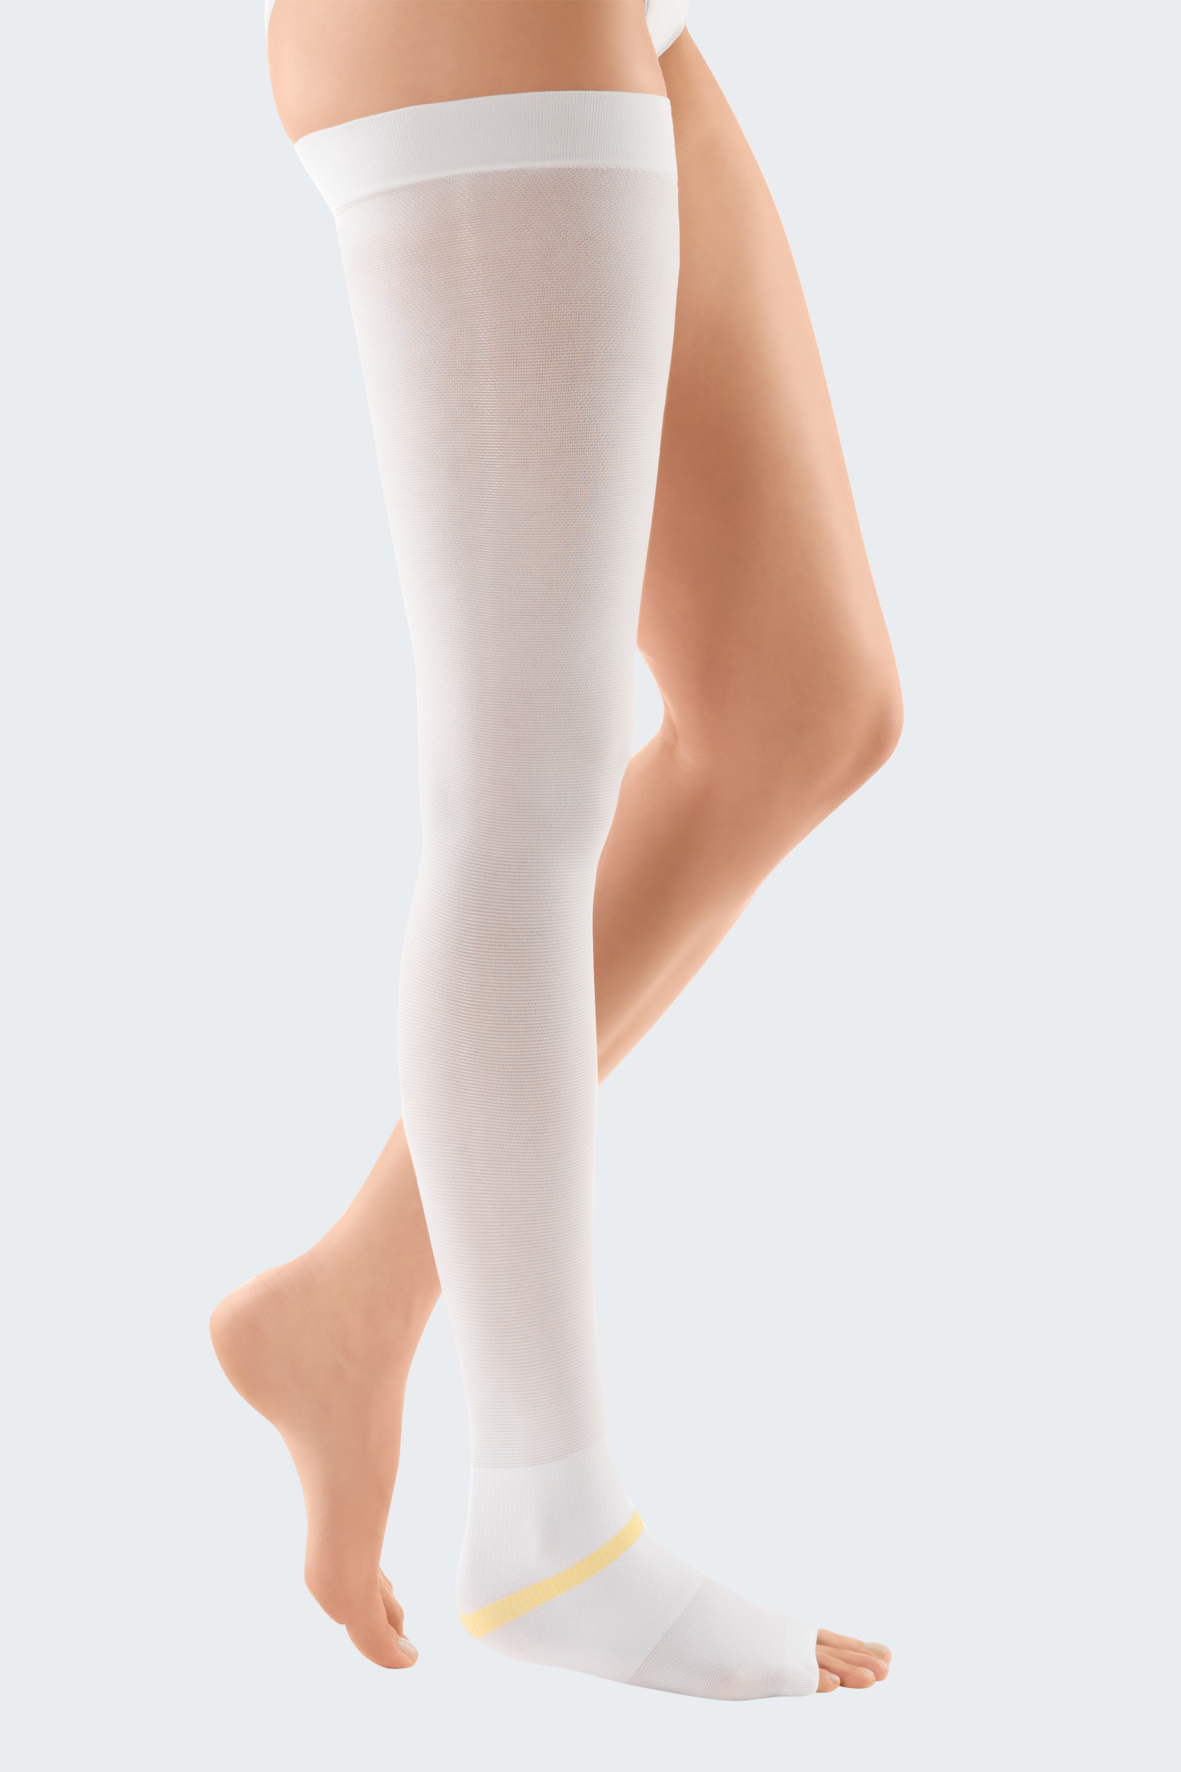 Circaid Juxtafit Essentials Leg, upper leg with knee, lower leg and foot  wrap, - JKR